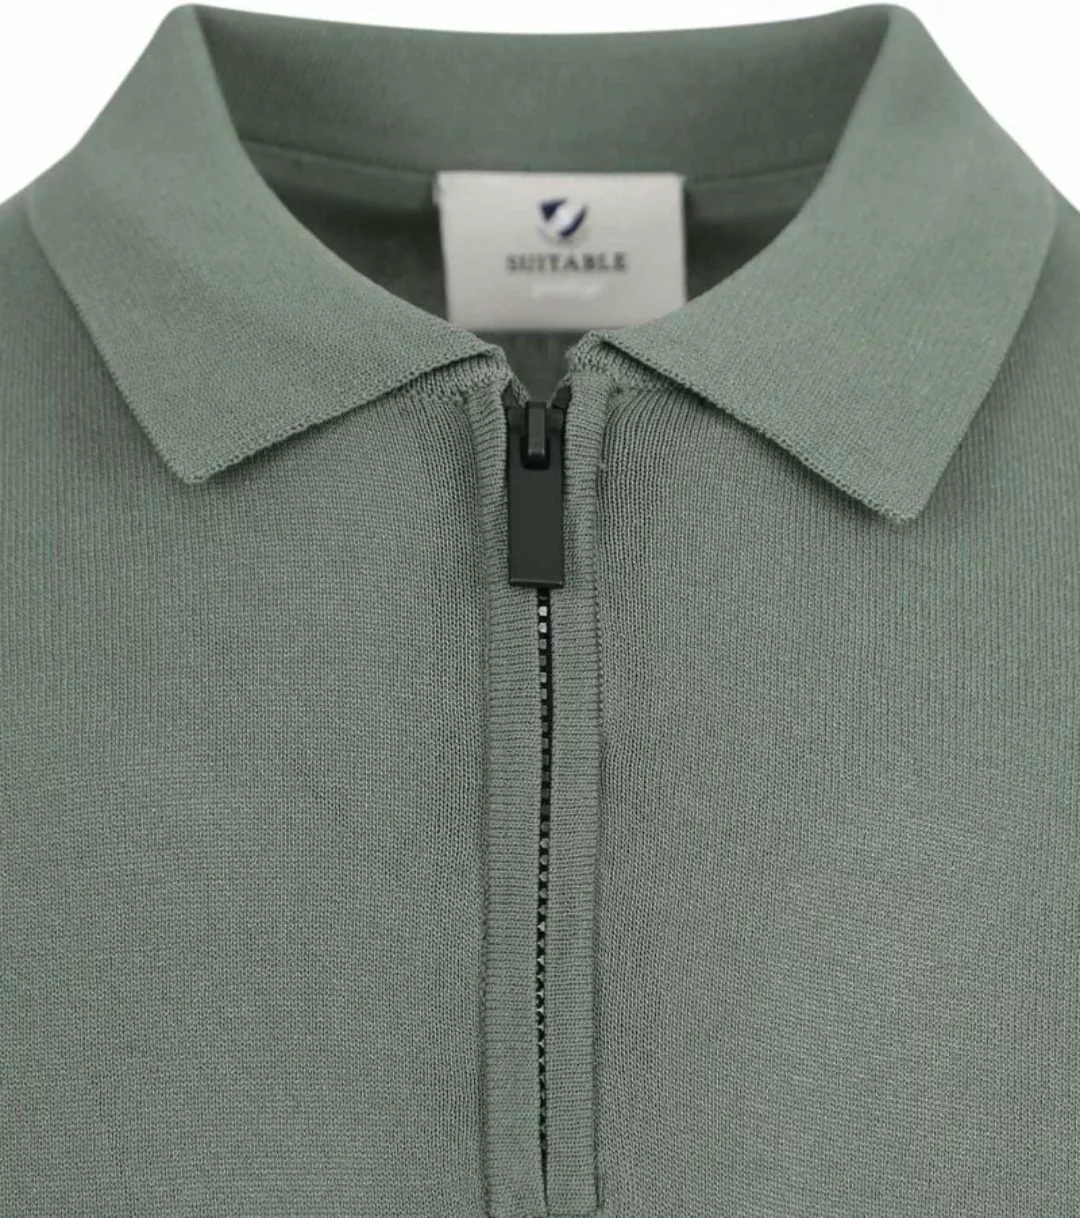 Suitable Cool Dry Knit Poloshirt Grün - Größe XL günstig online kaufen